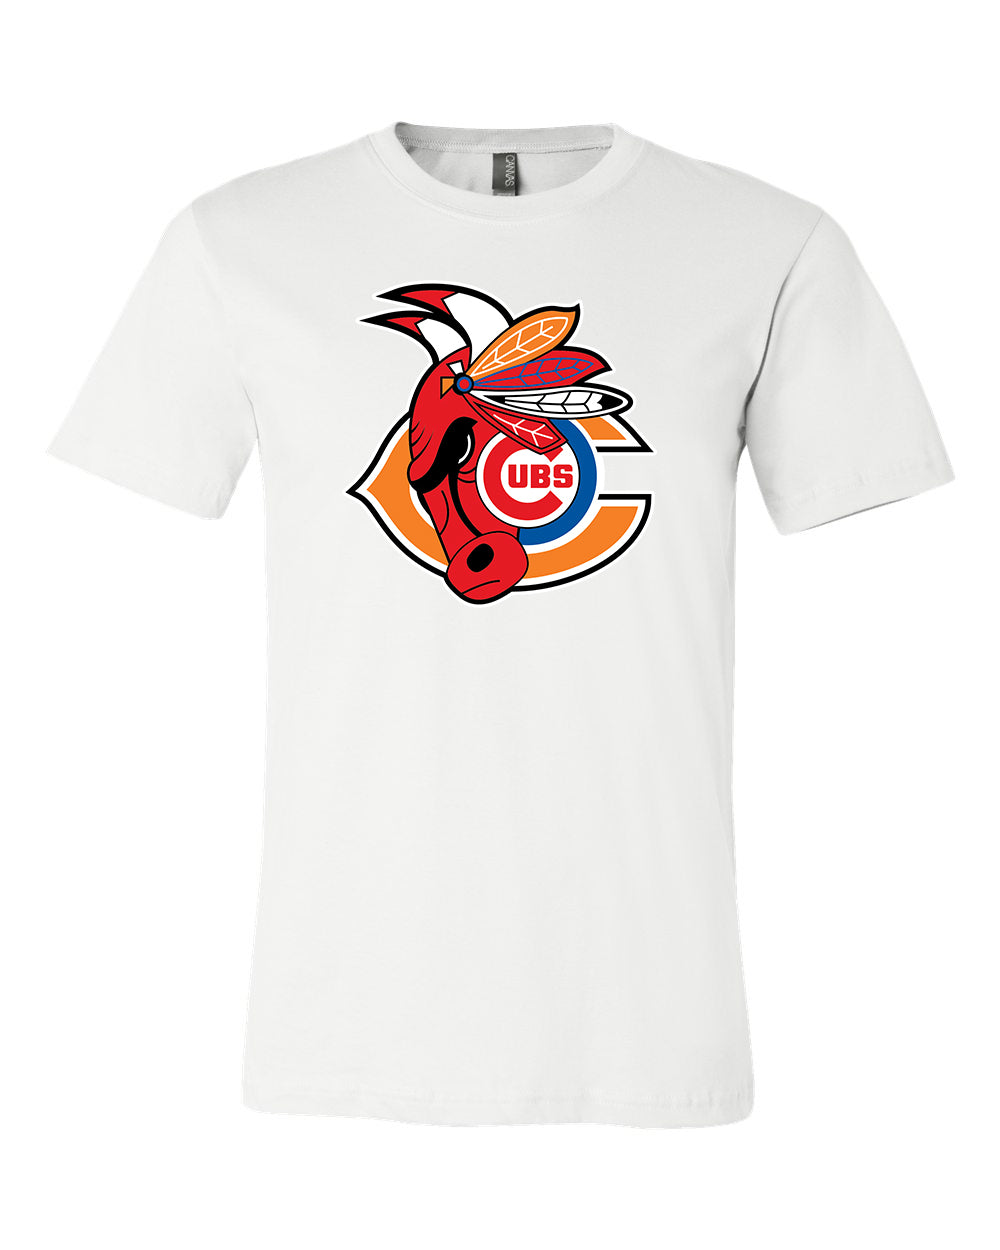 Chicago Cubs Bulls Blackhawks MASH UP Logo T-shirt 6 Sizes S-3XL